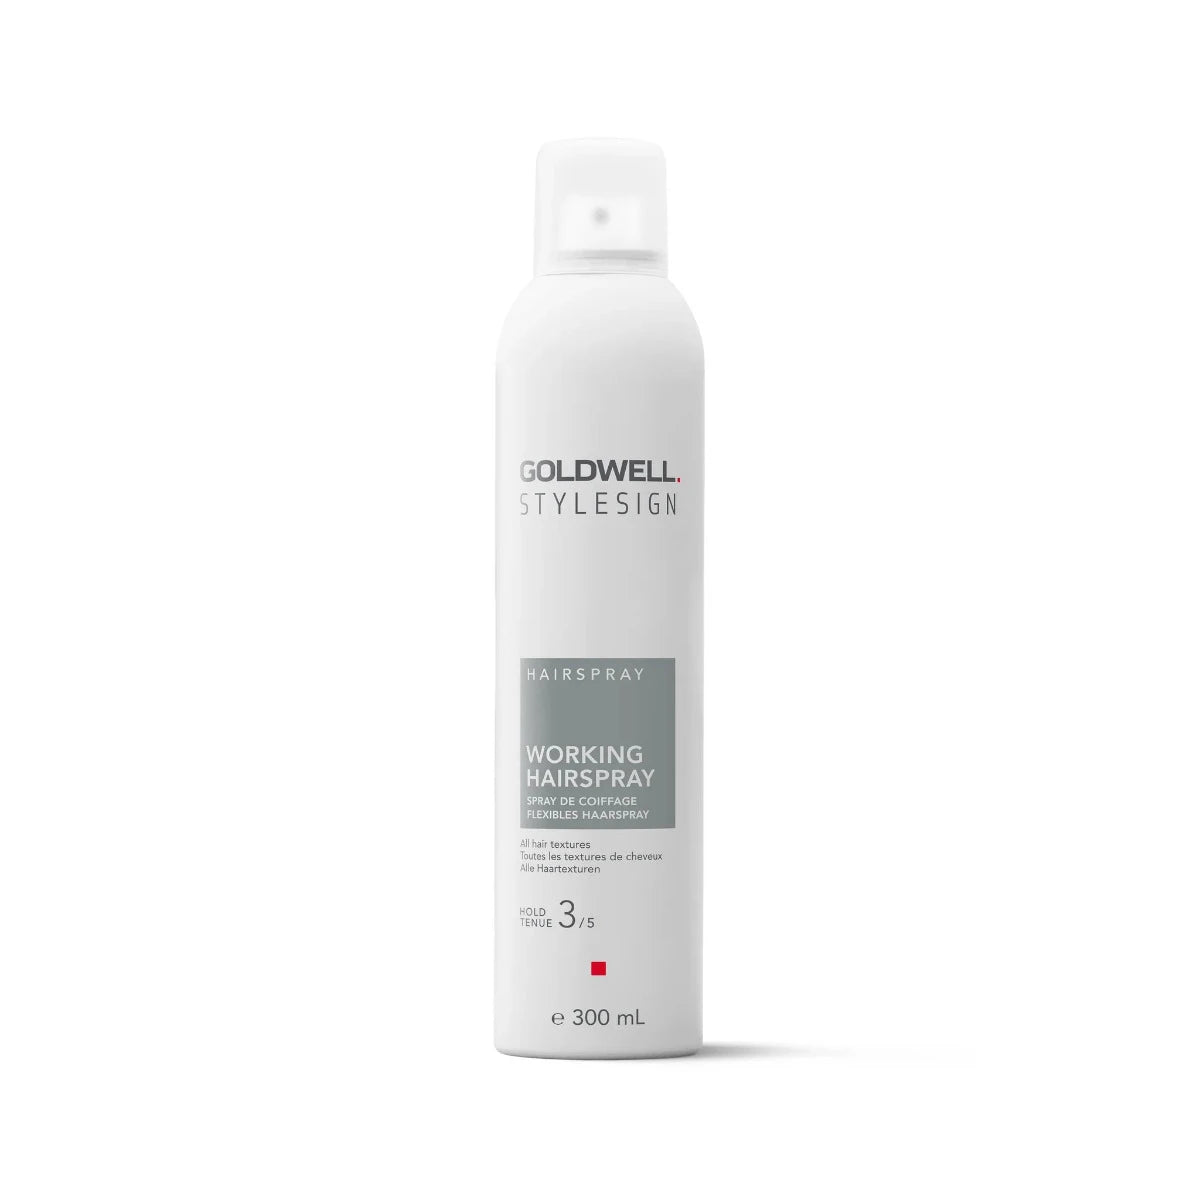 Goldwell StyleSign - Working Hairspray